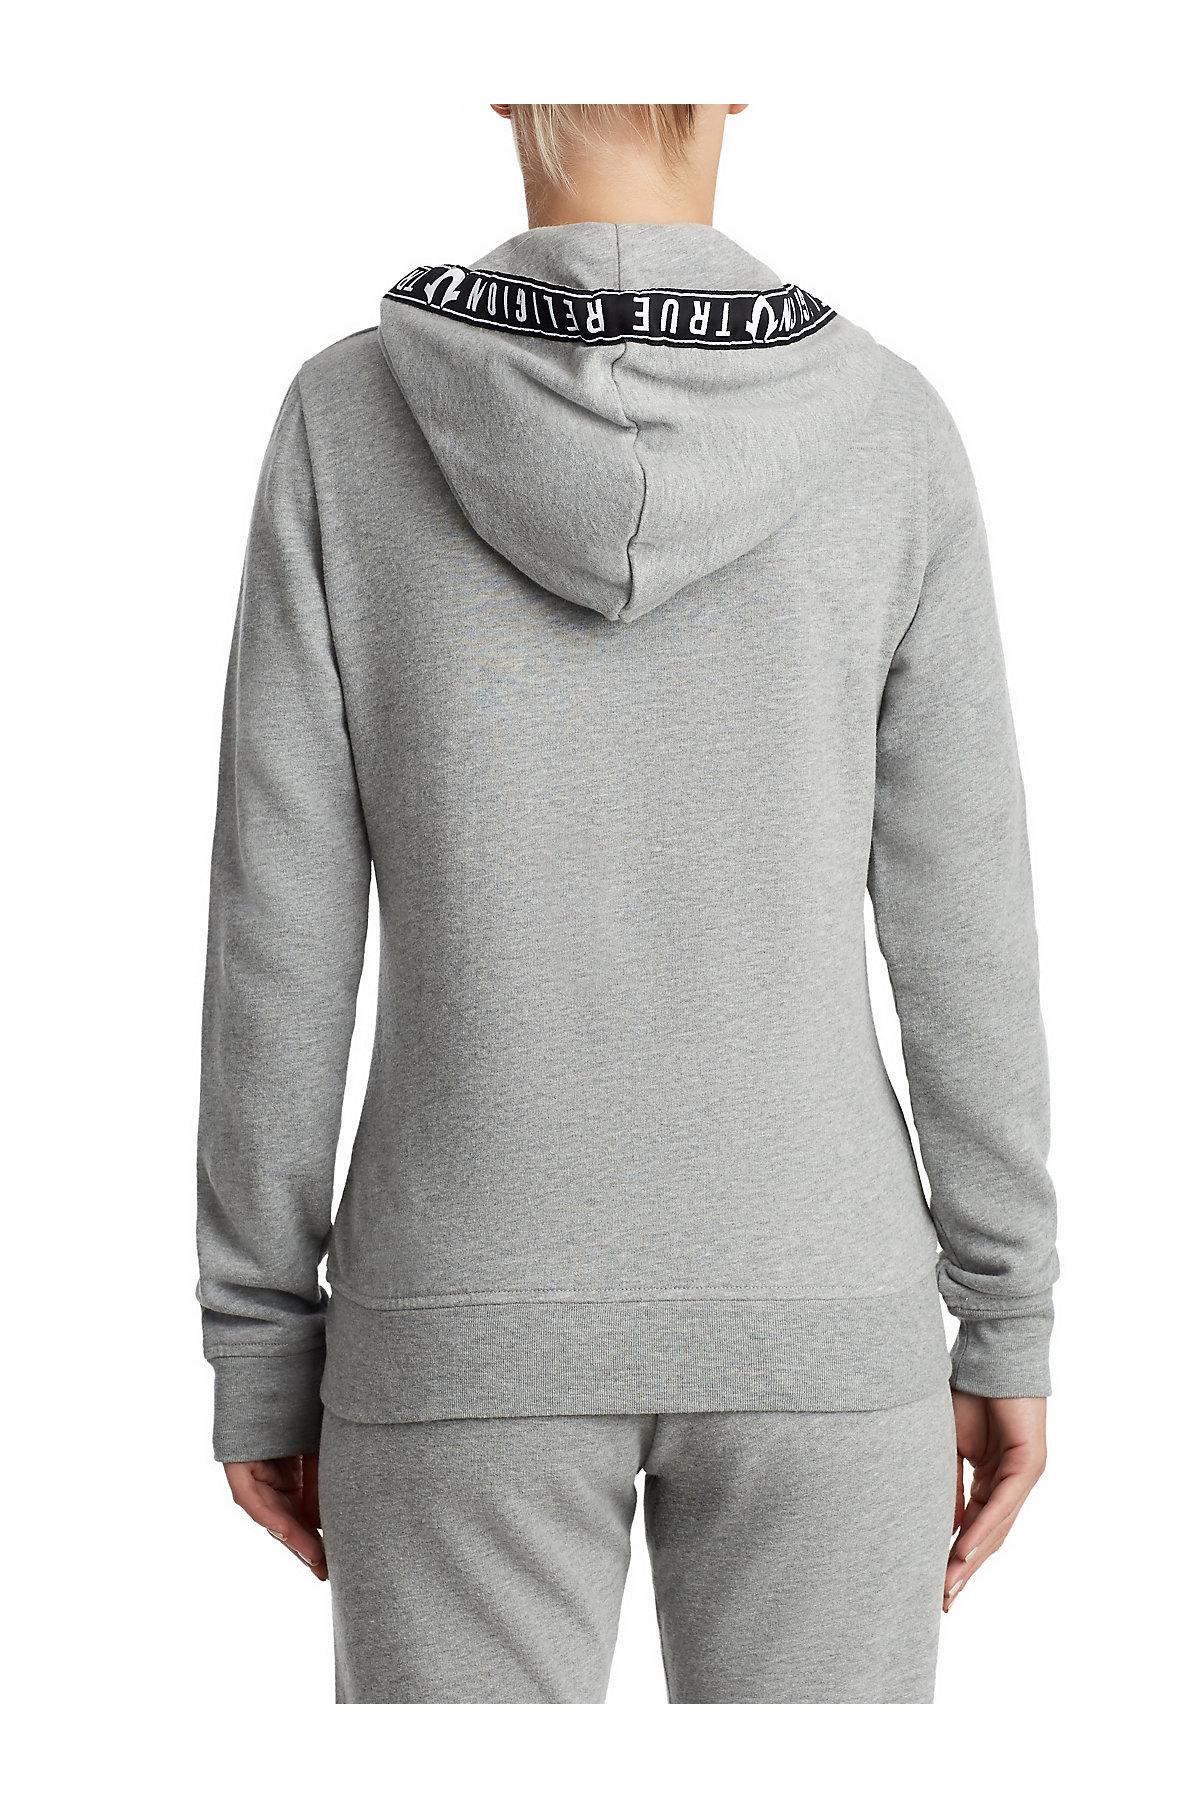 true religion women's logo tape zip up hoodie